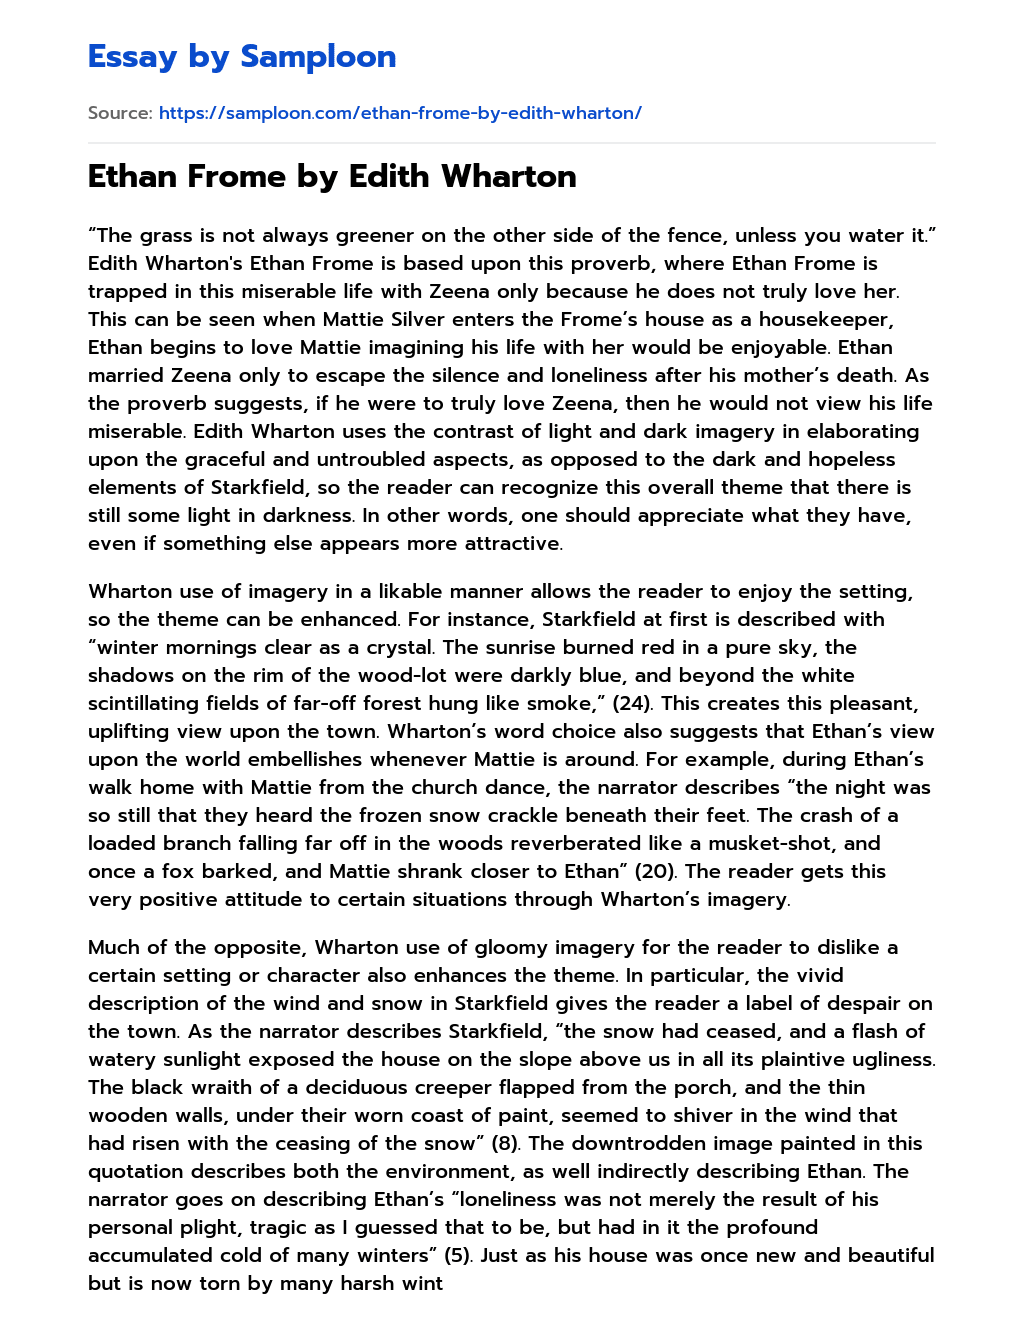 Ethan Frome by Edith Wharton essay